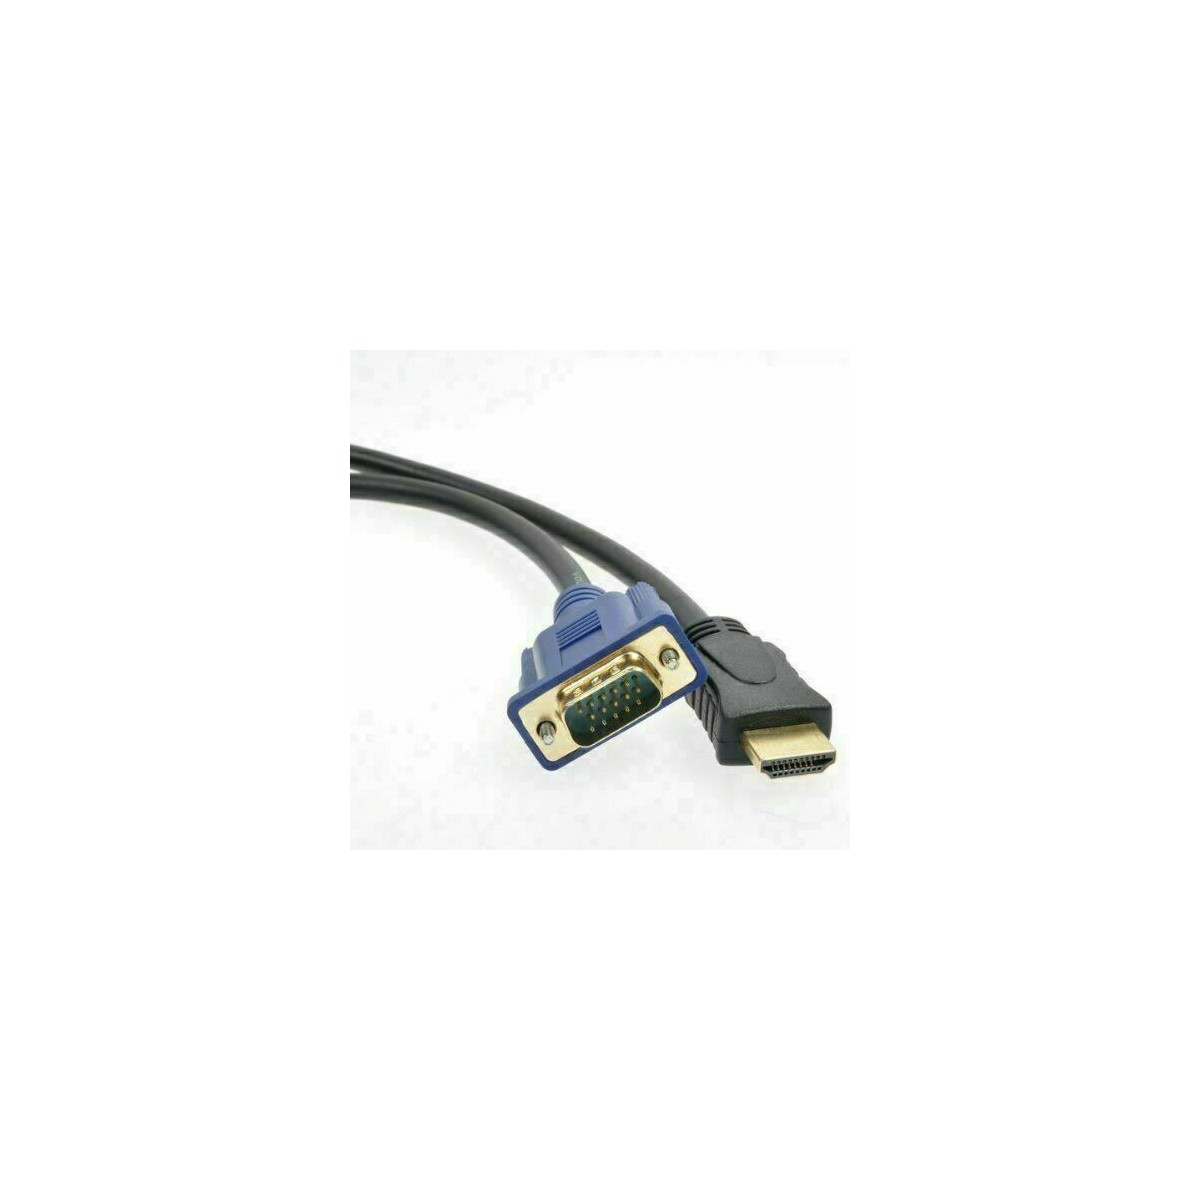 Câble HDMI vers VGA 1.8m Noir